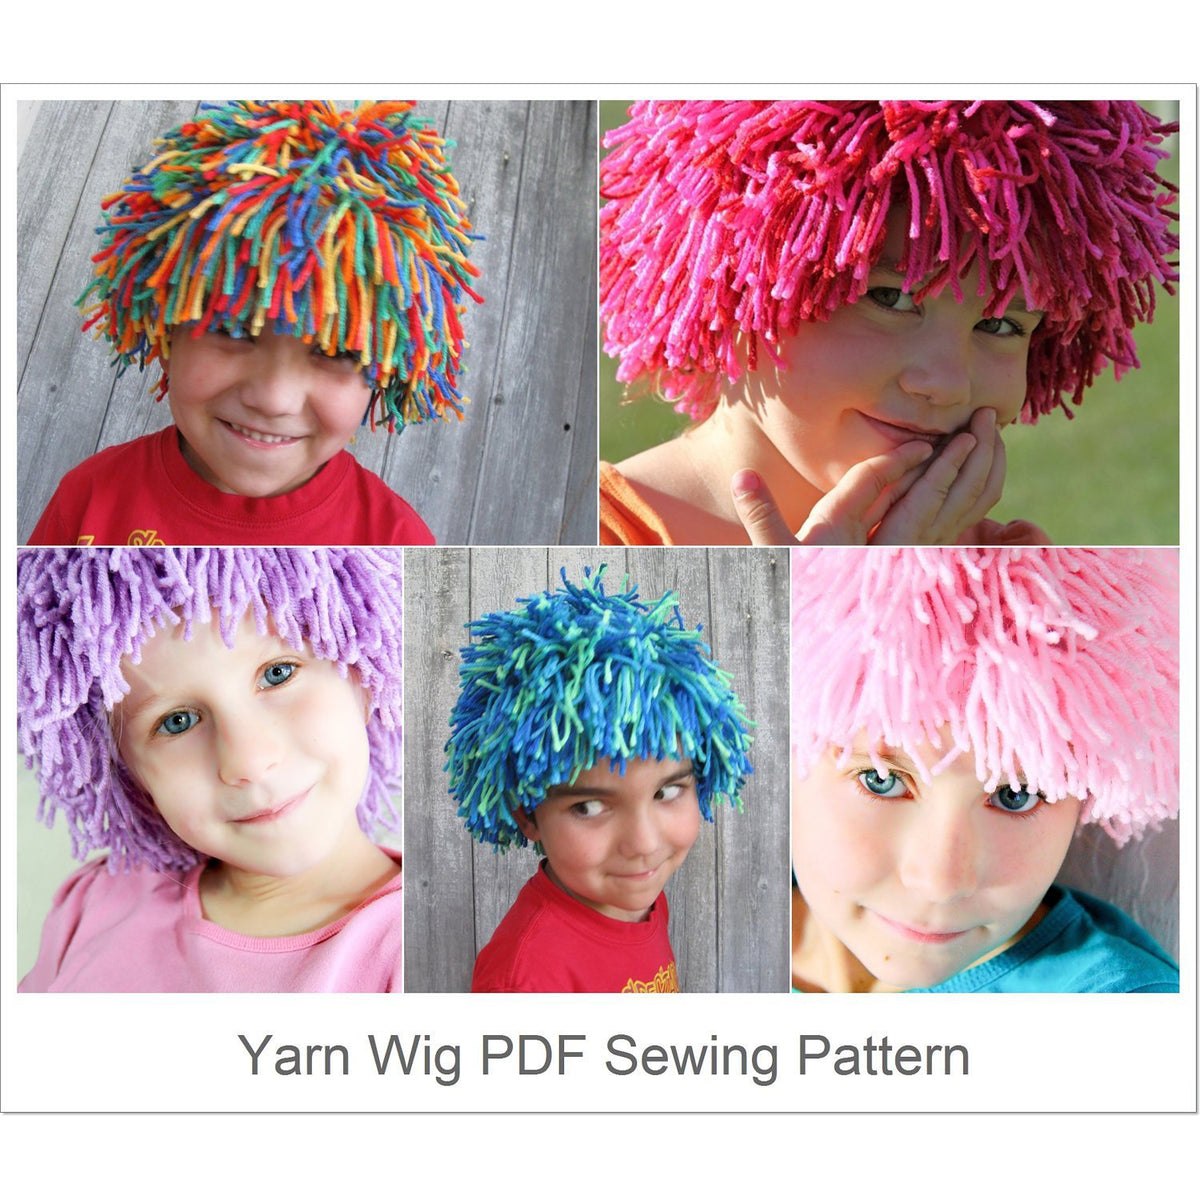 DIY Yarn Wig Sewing Pattern - Halloween costume wig tutorial PDF e pat ...